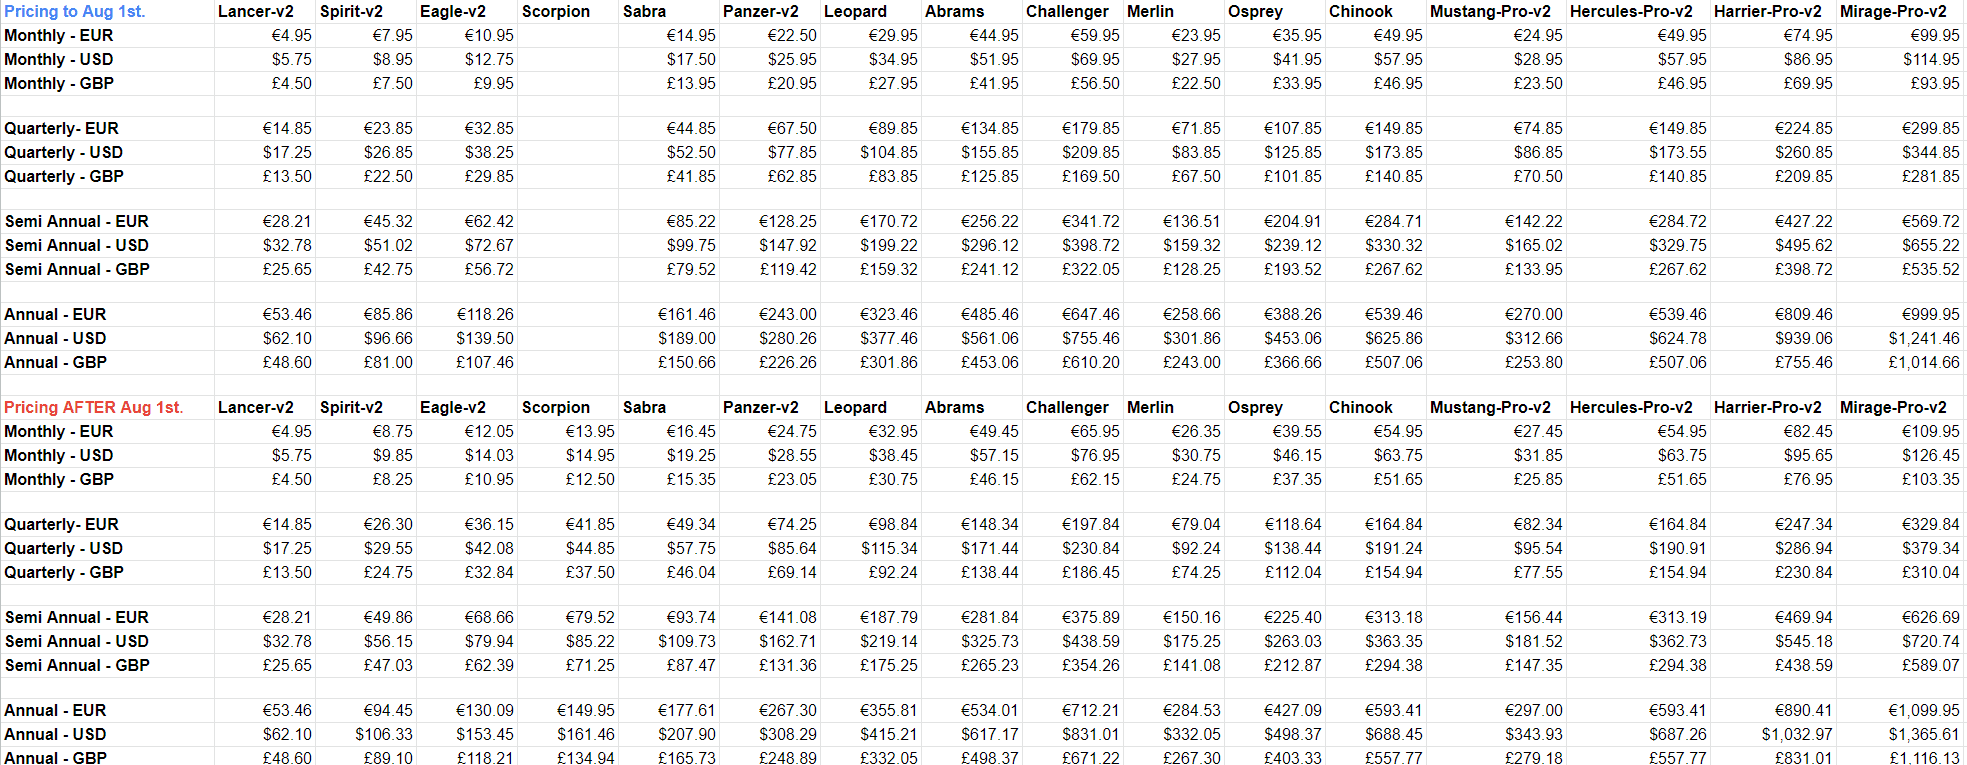 Price-Change Table